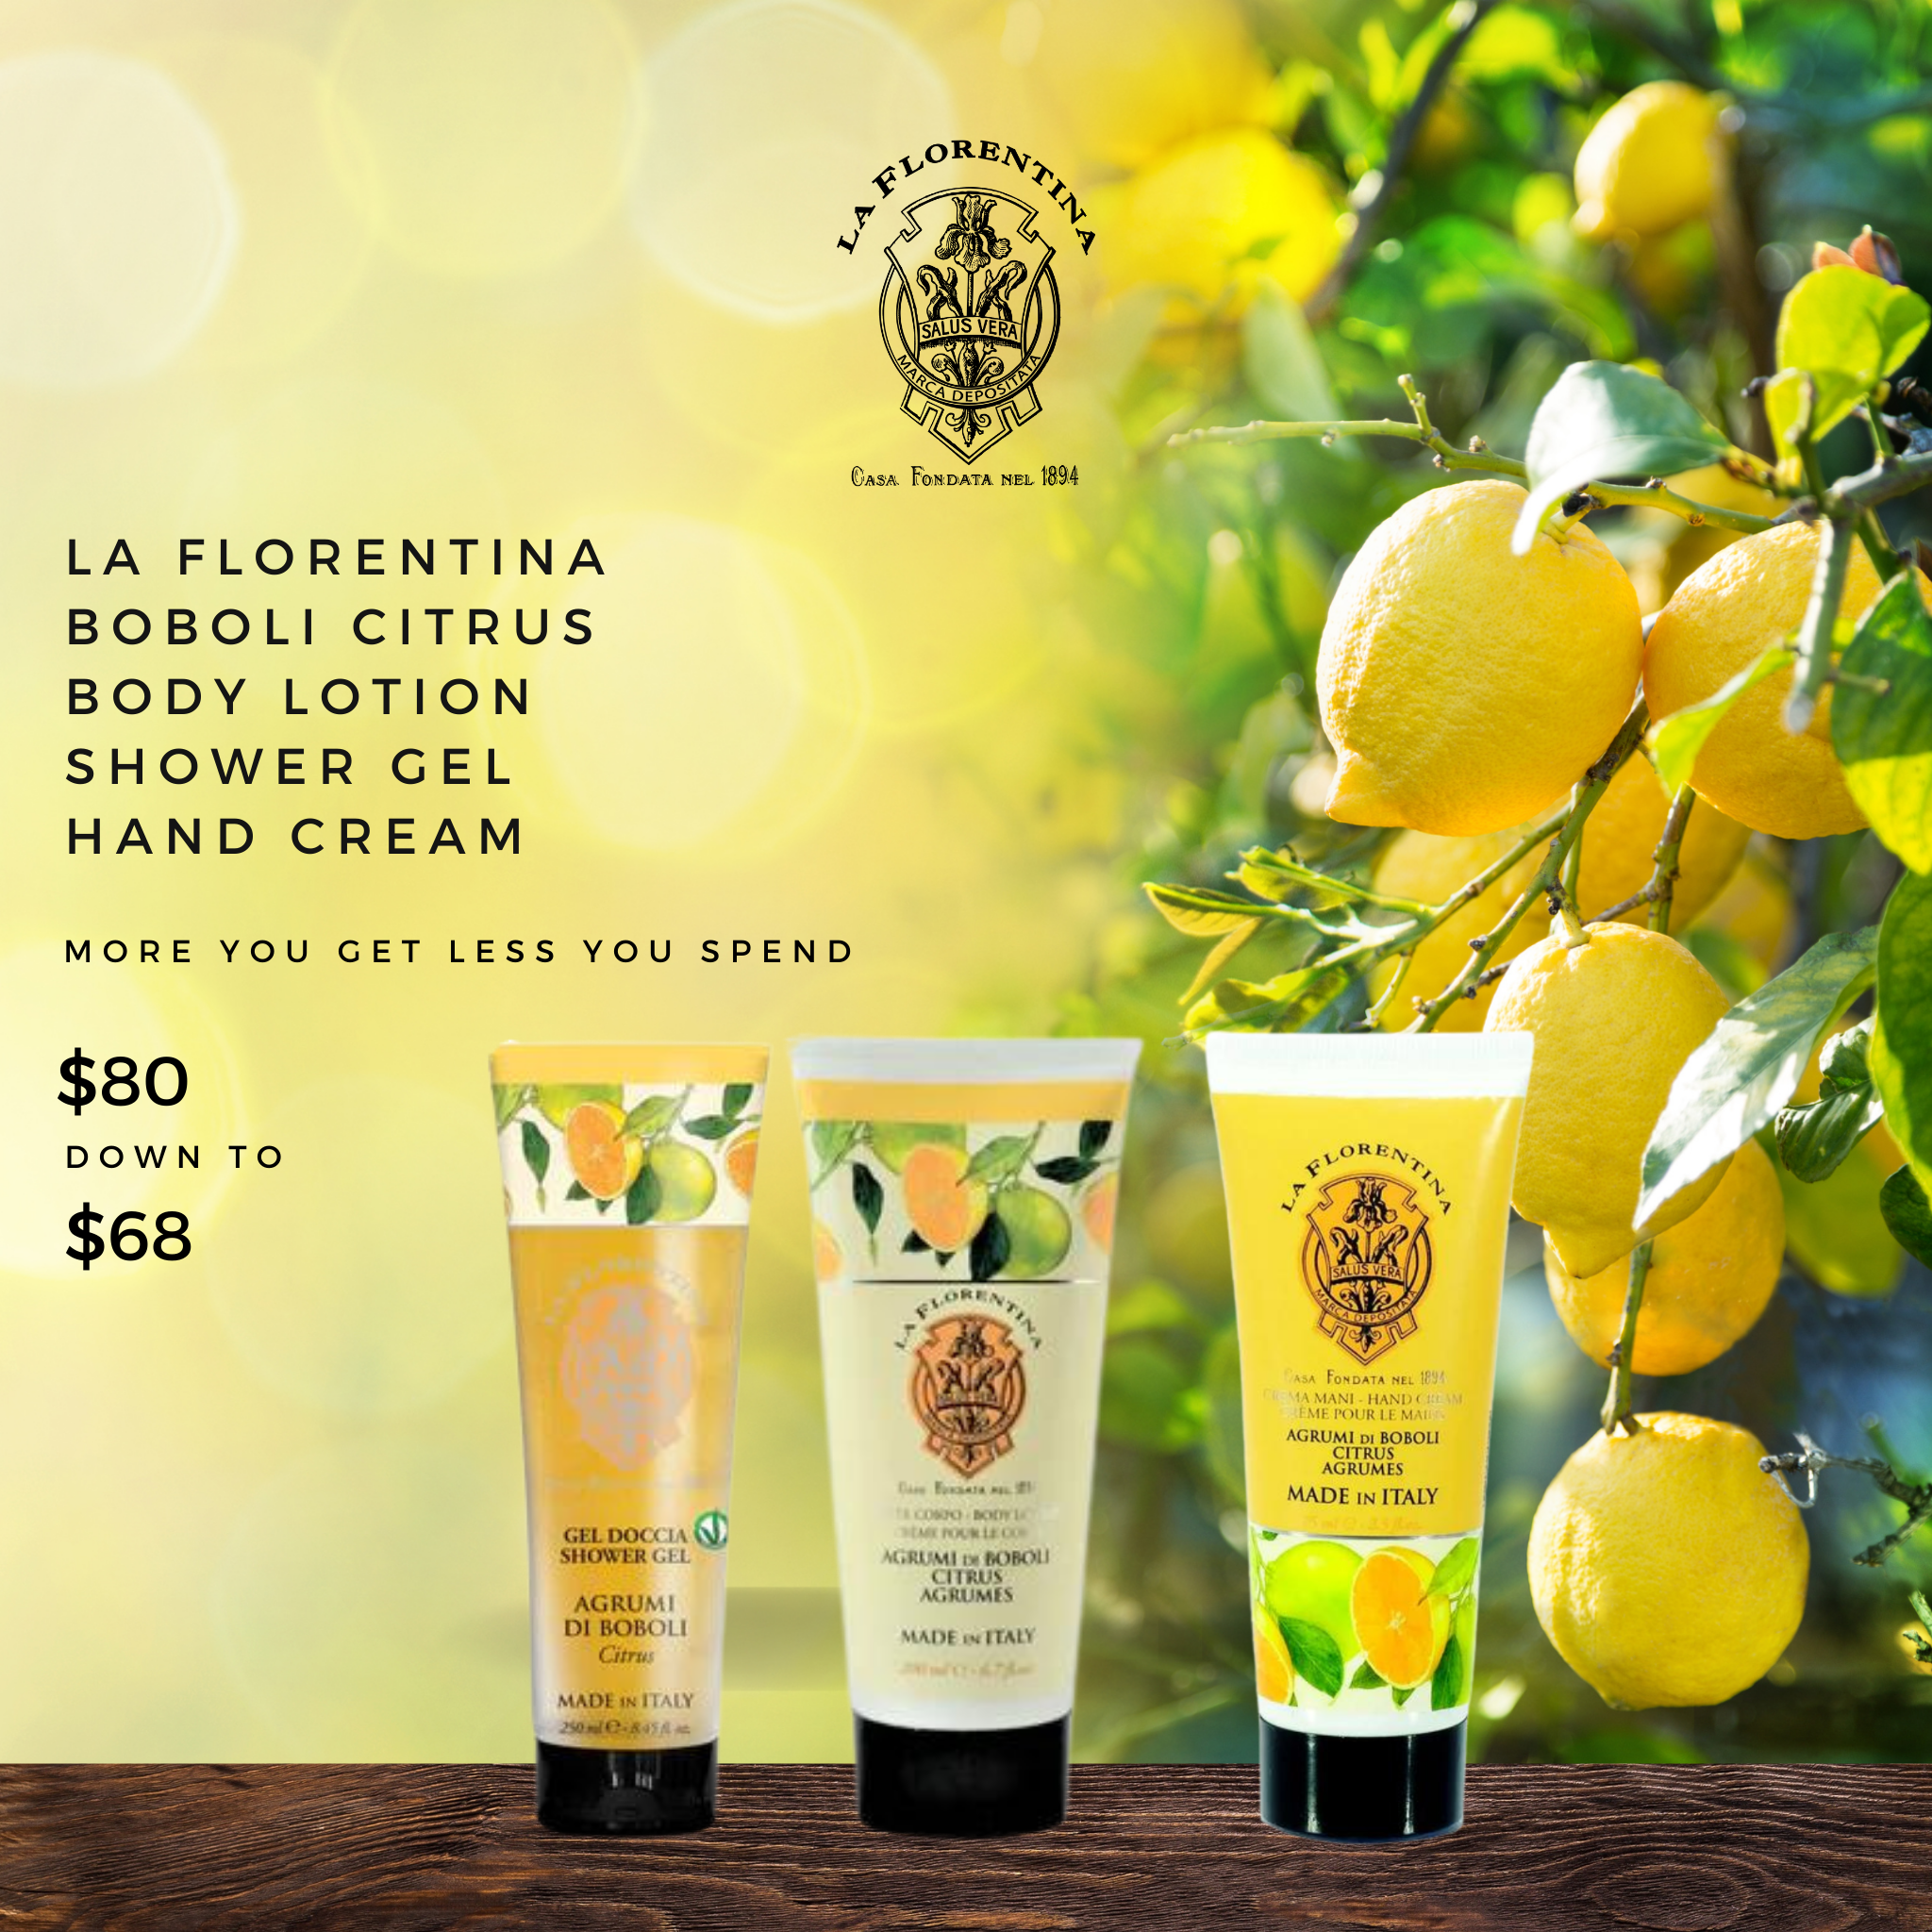 La Florentina Boboli Citrus Shower Gel, Body Lotion and Hand Cream